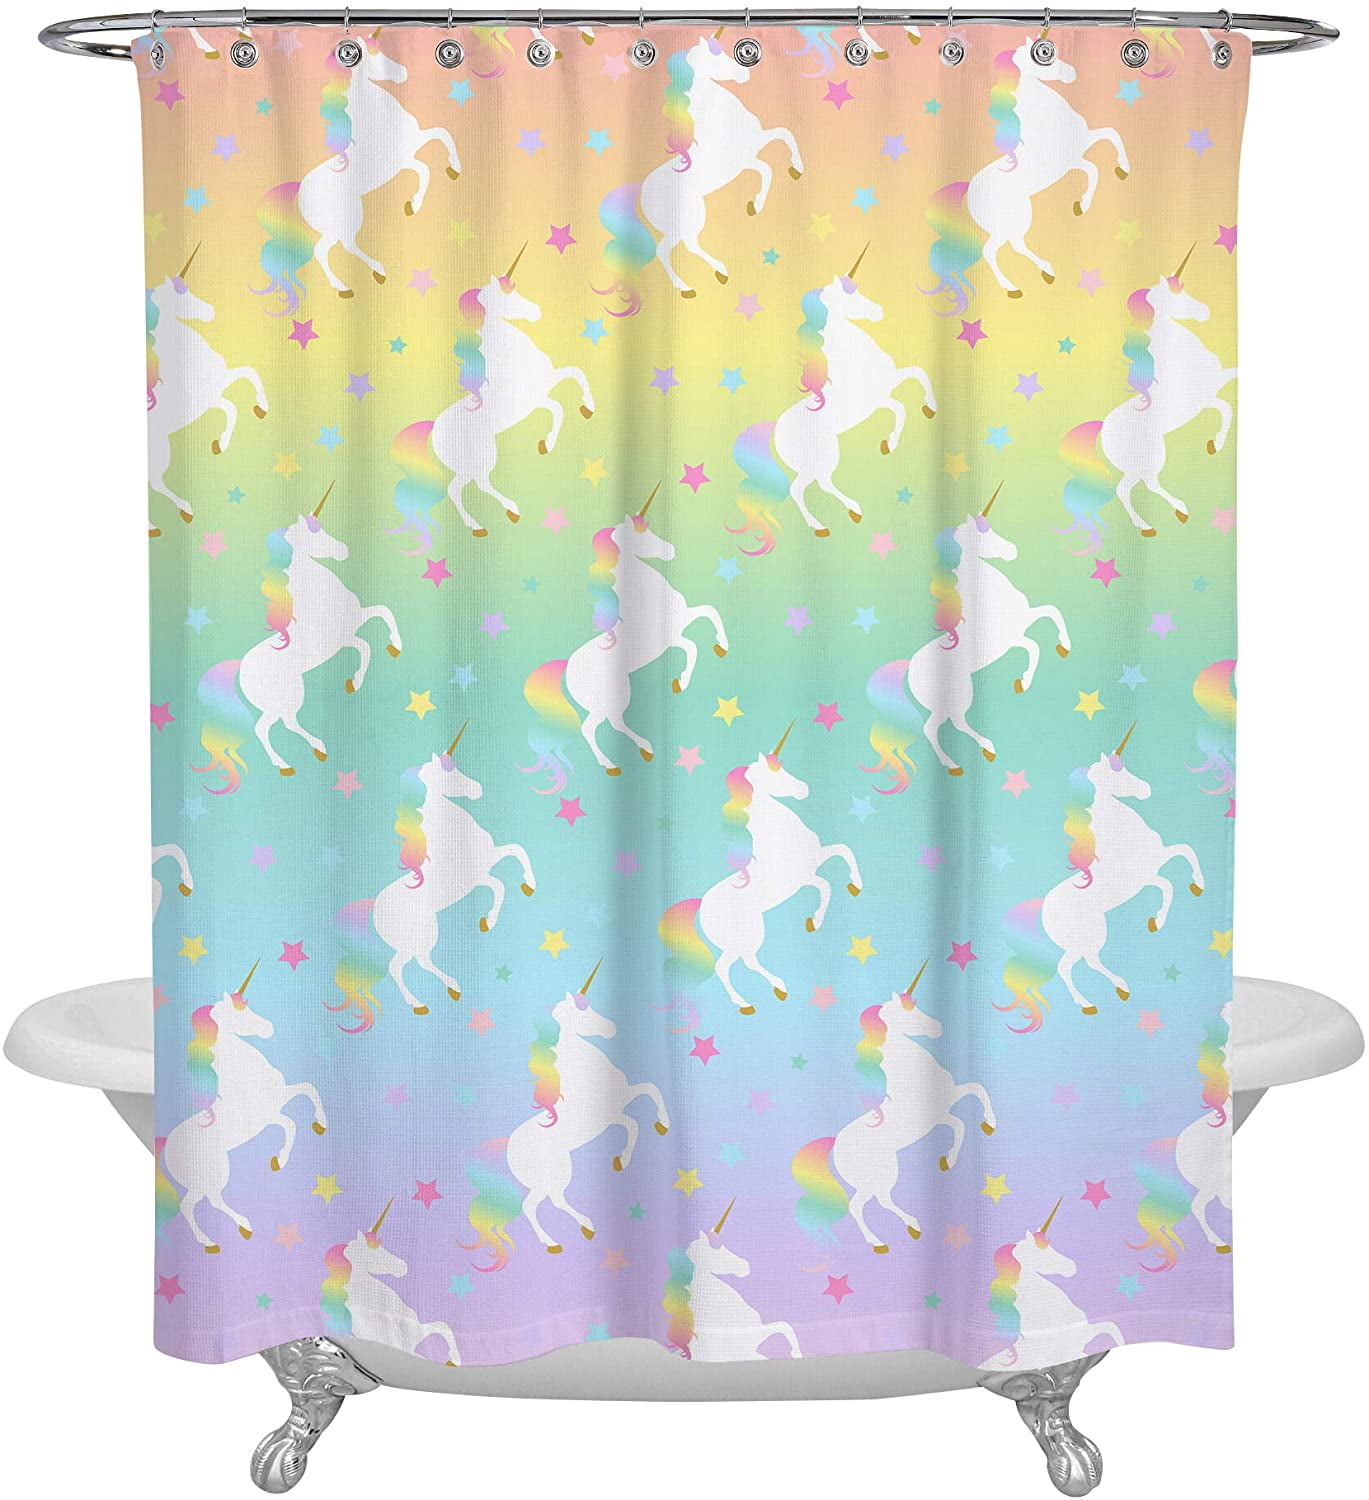 72" Night Fairy Tale Forest Hut Shower Curtain Set Bathroom Mat Polyester Fabric 